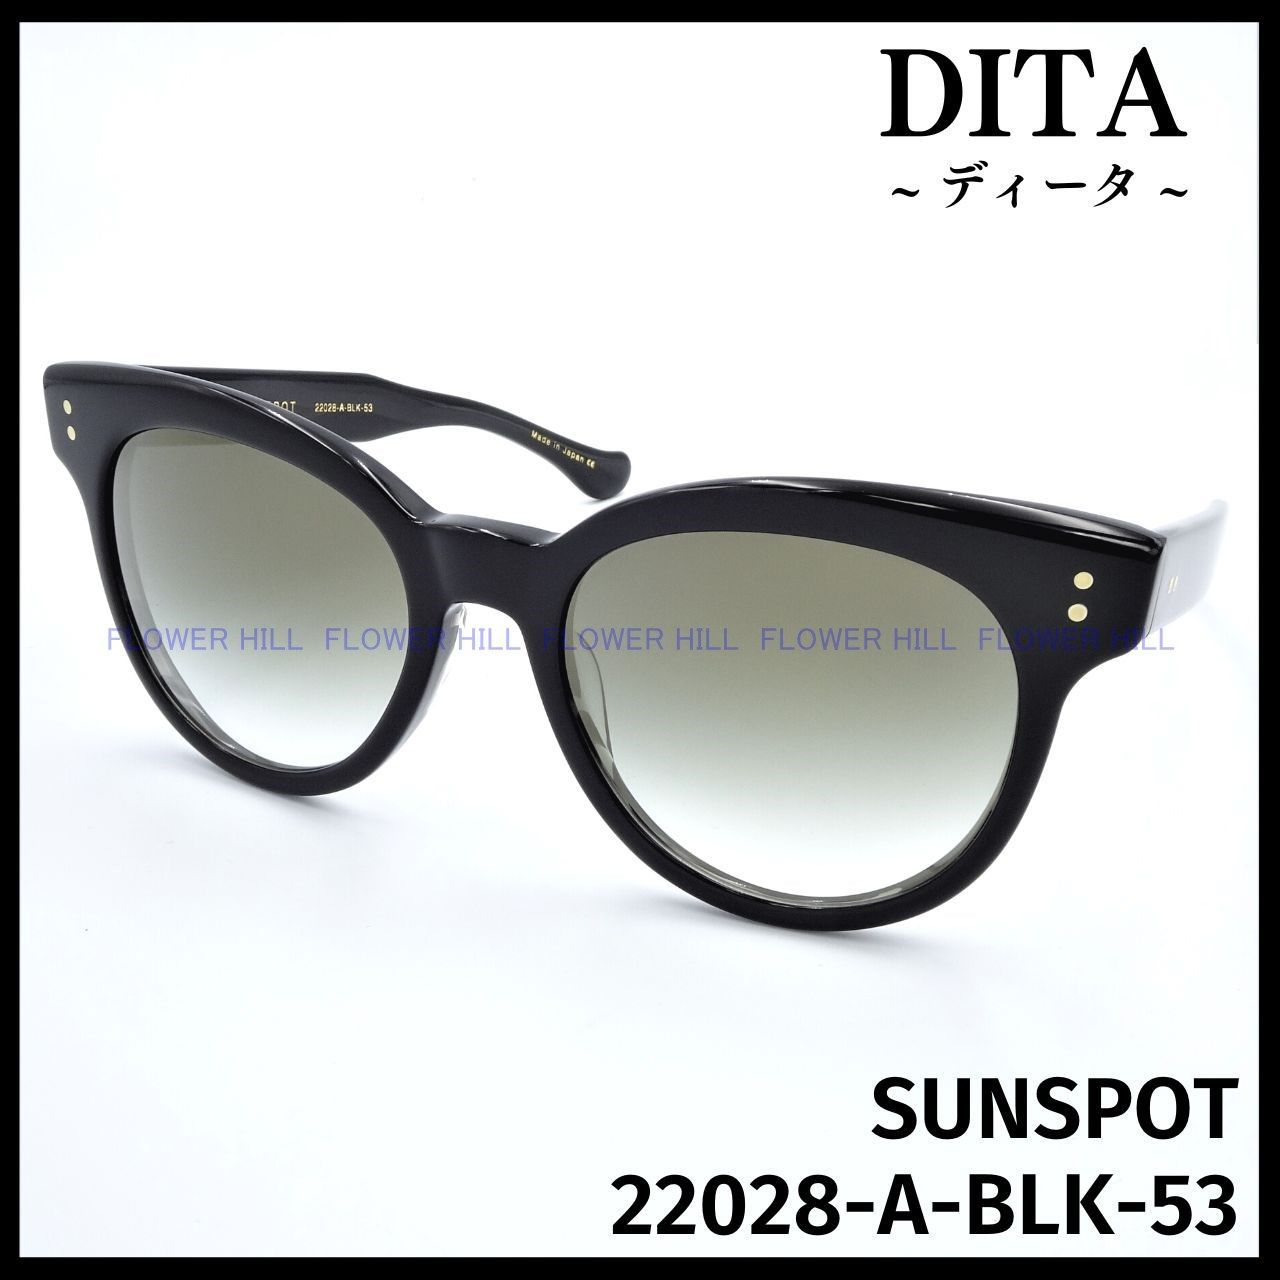 DITA ディータ サングラス SUNSPOT 22028-A-BLK-53 ブラック 日本製